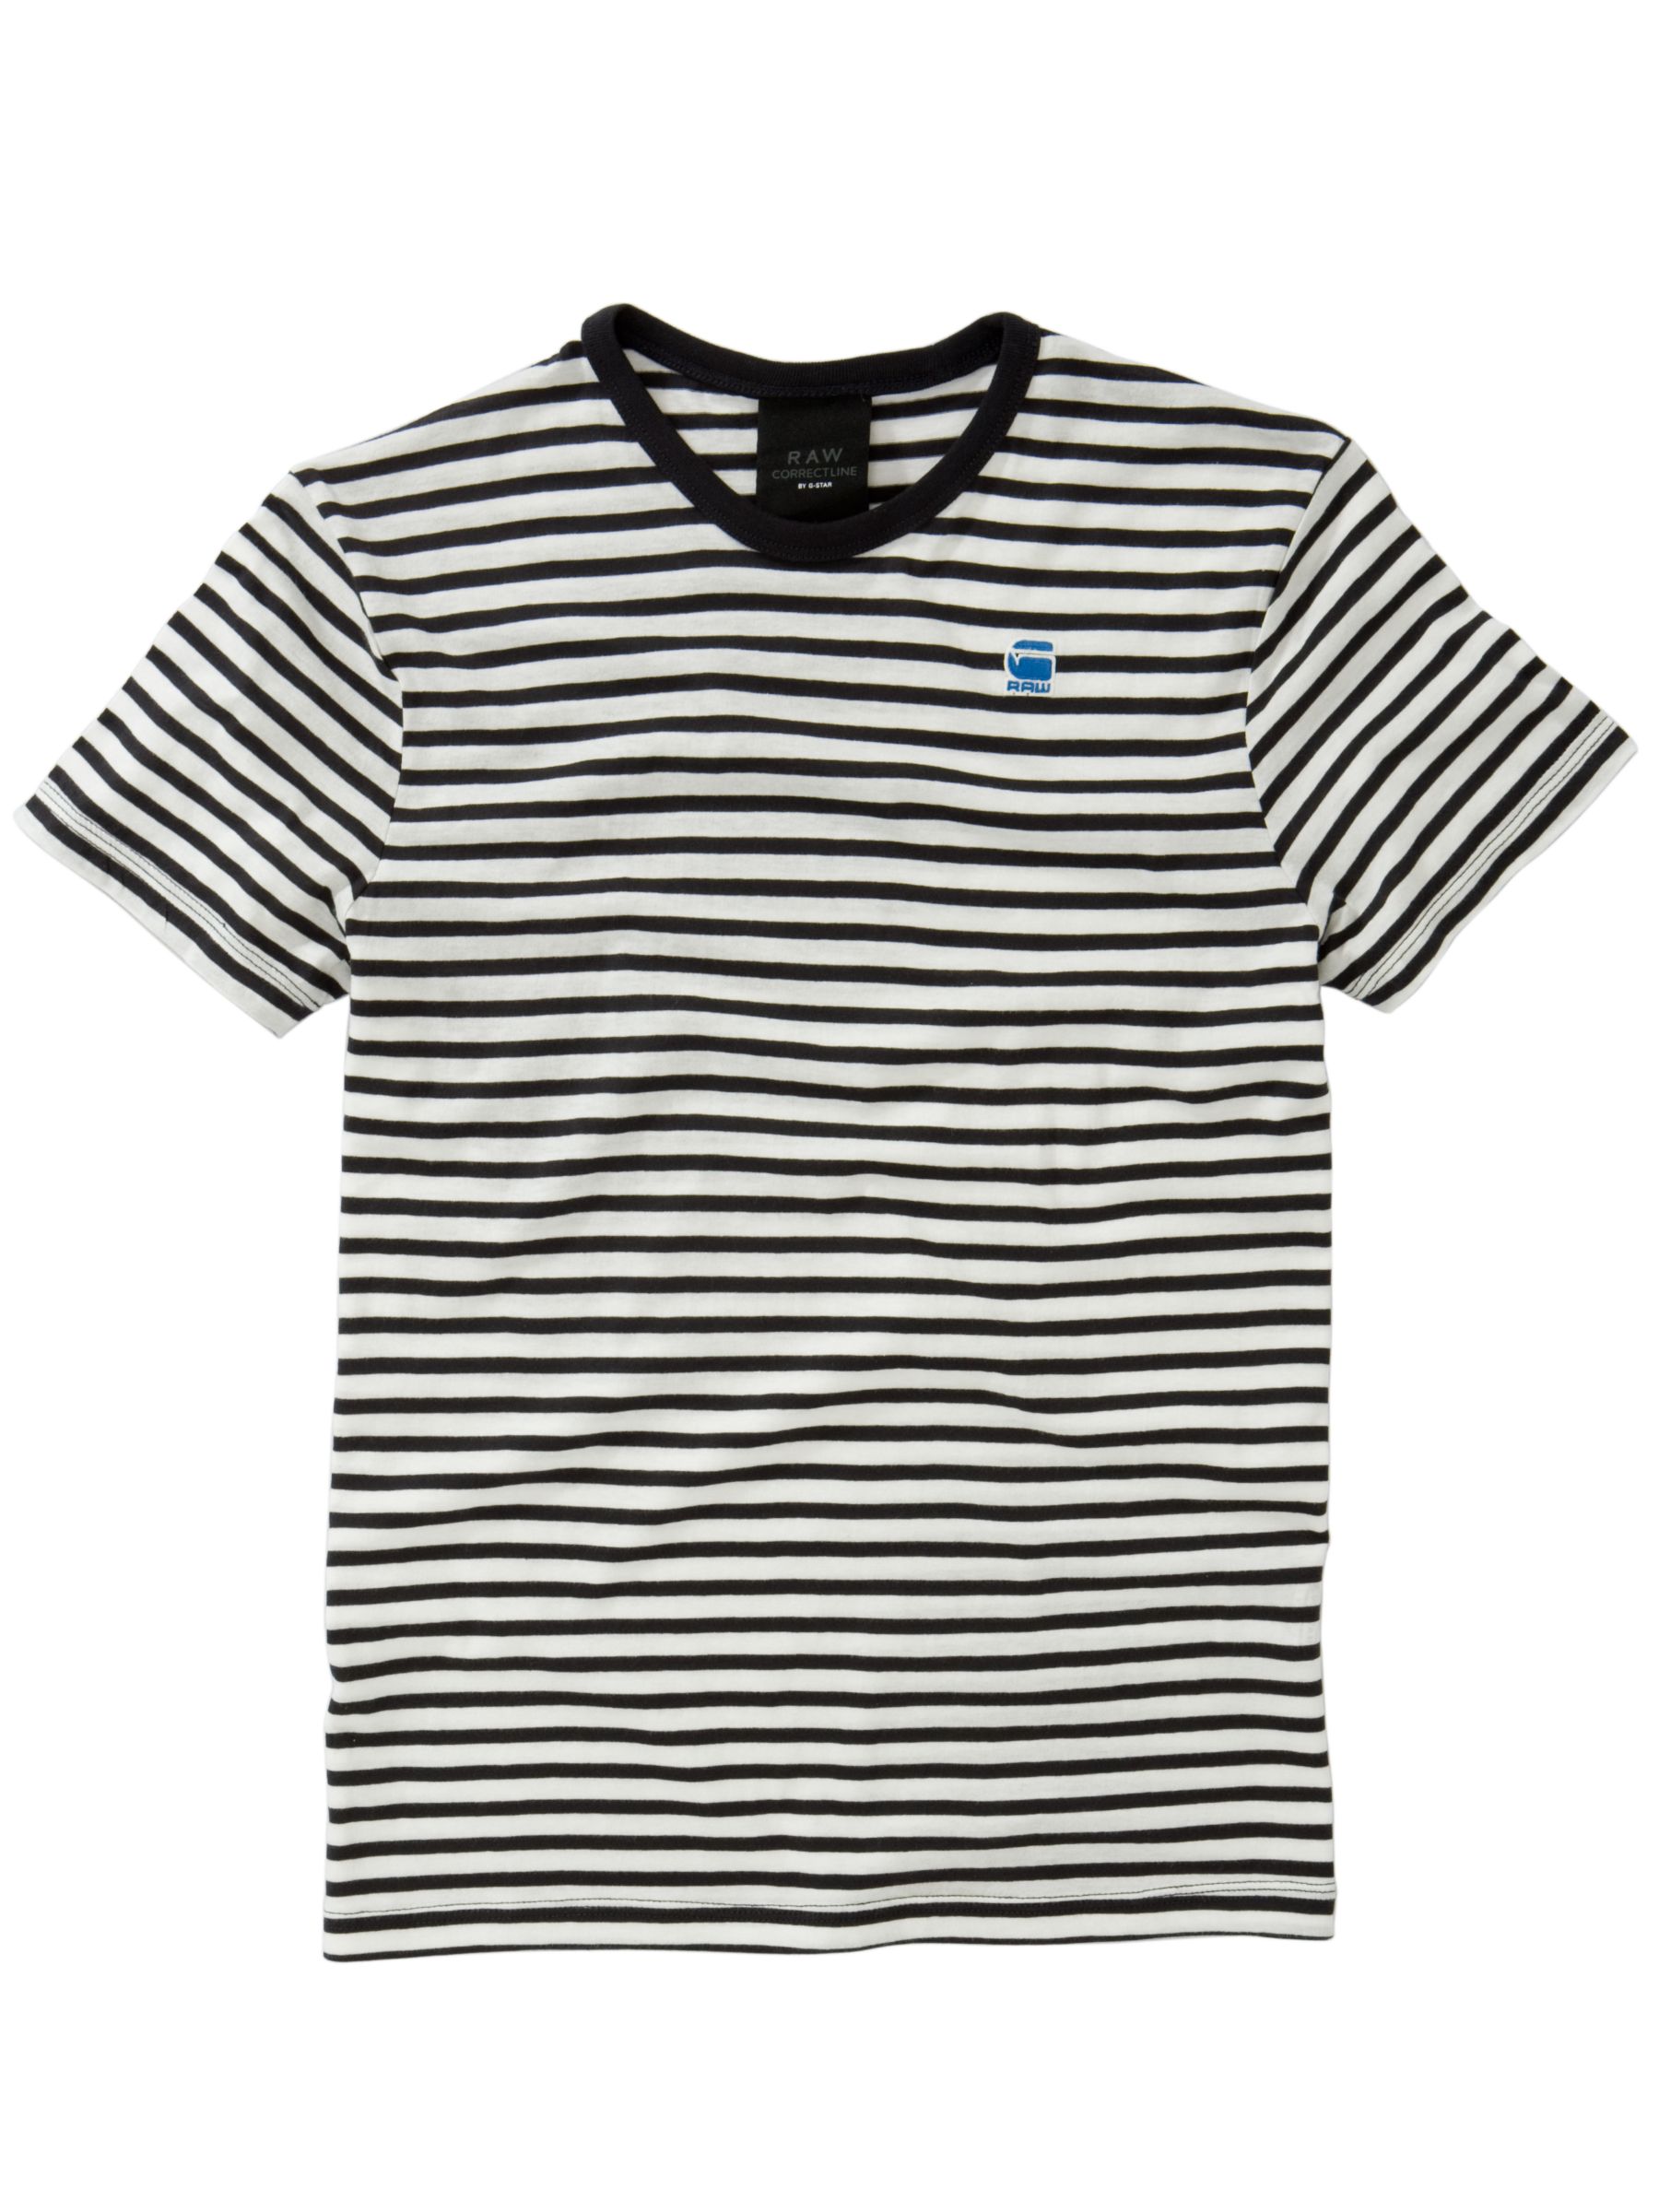 G-Star Raw Breton Stripe Short Sleeve T-Shirt,